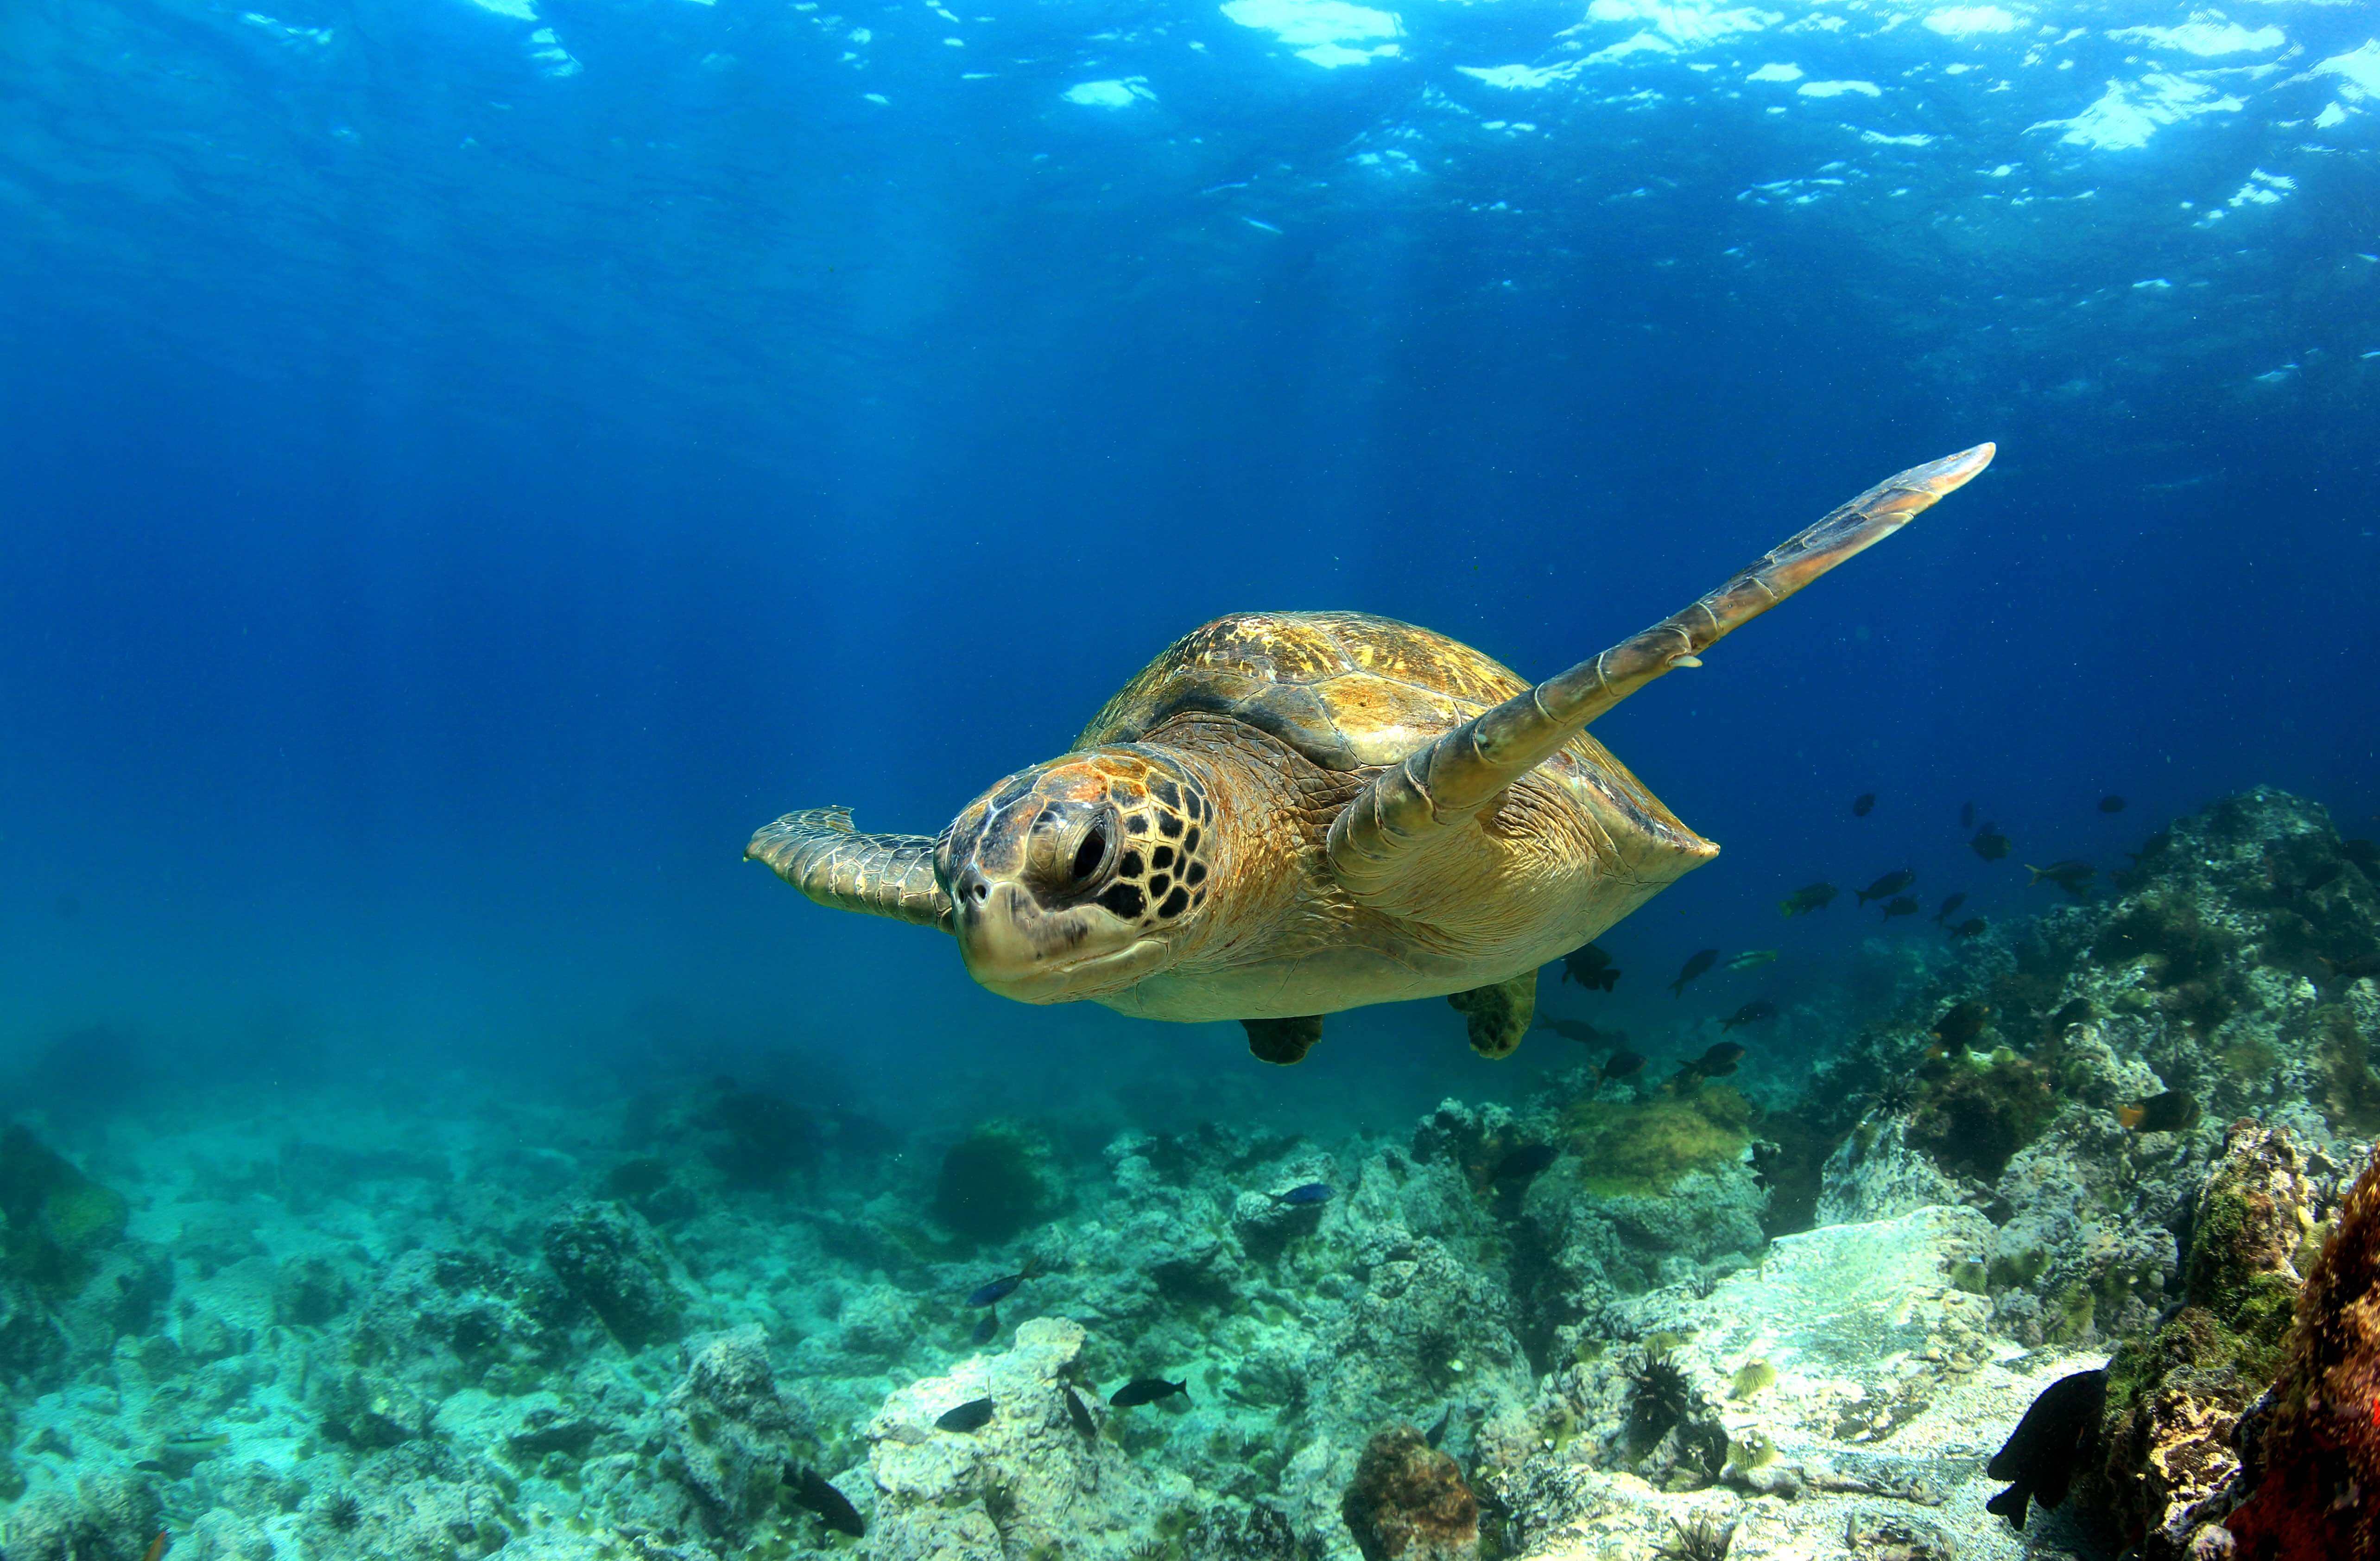 A sea turtle swims through the ocean.